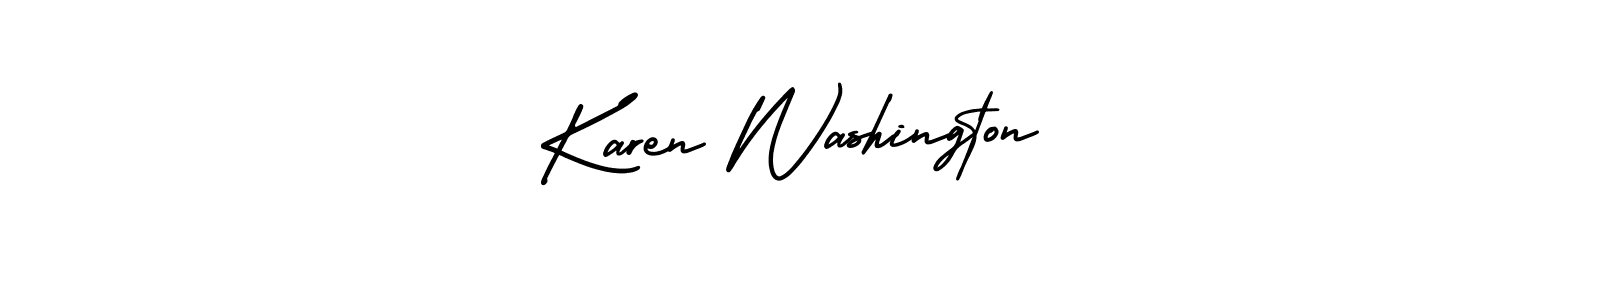 Make a beautiful signature design for name Karen Washington. Use this online signature maker to create a handwritten signature for free. Karen Washington signature style 3 images and pictures png